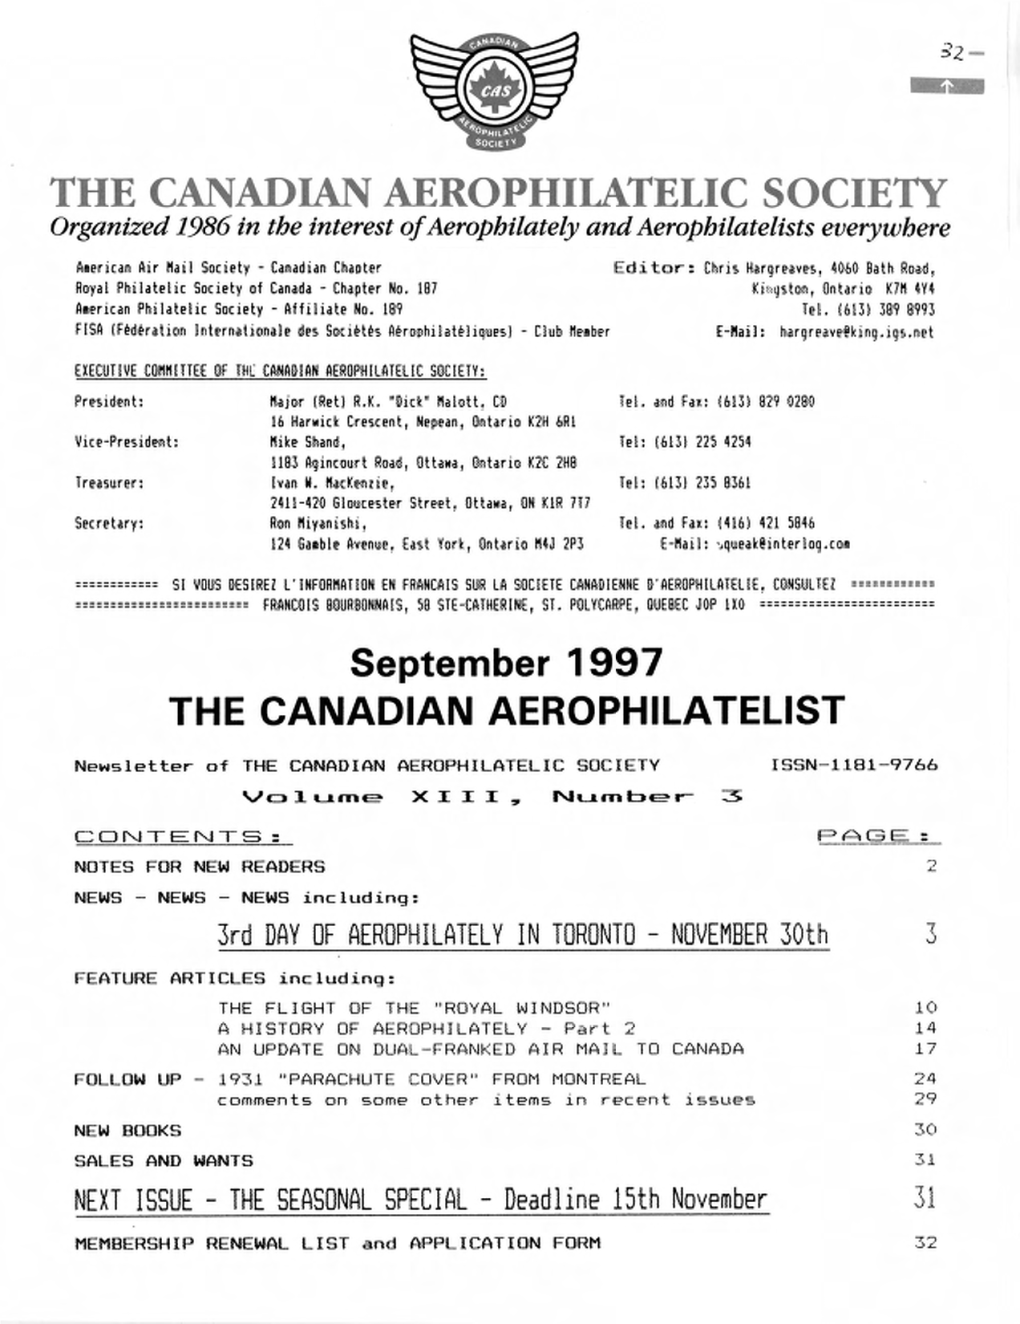 The Canadian Aerophilatelist